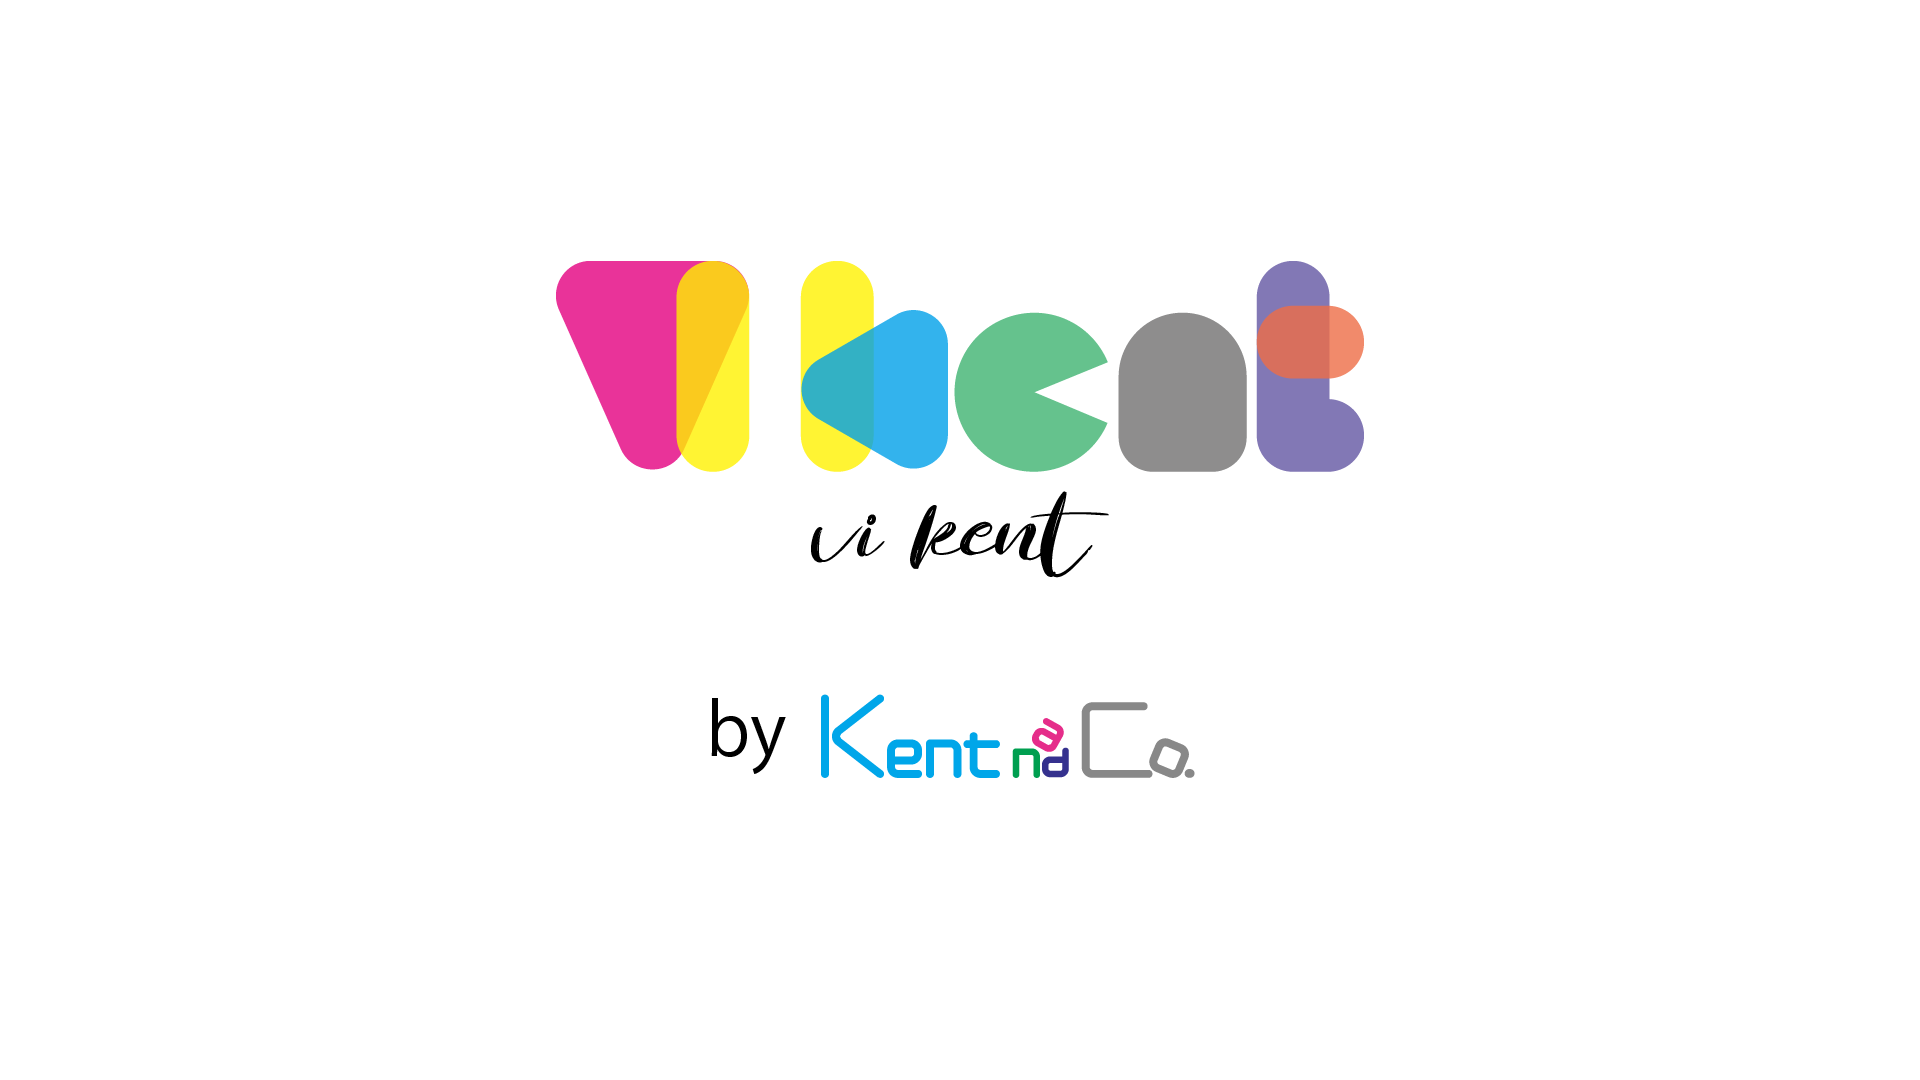 【画像】vi kent by Kent&Co.